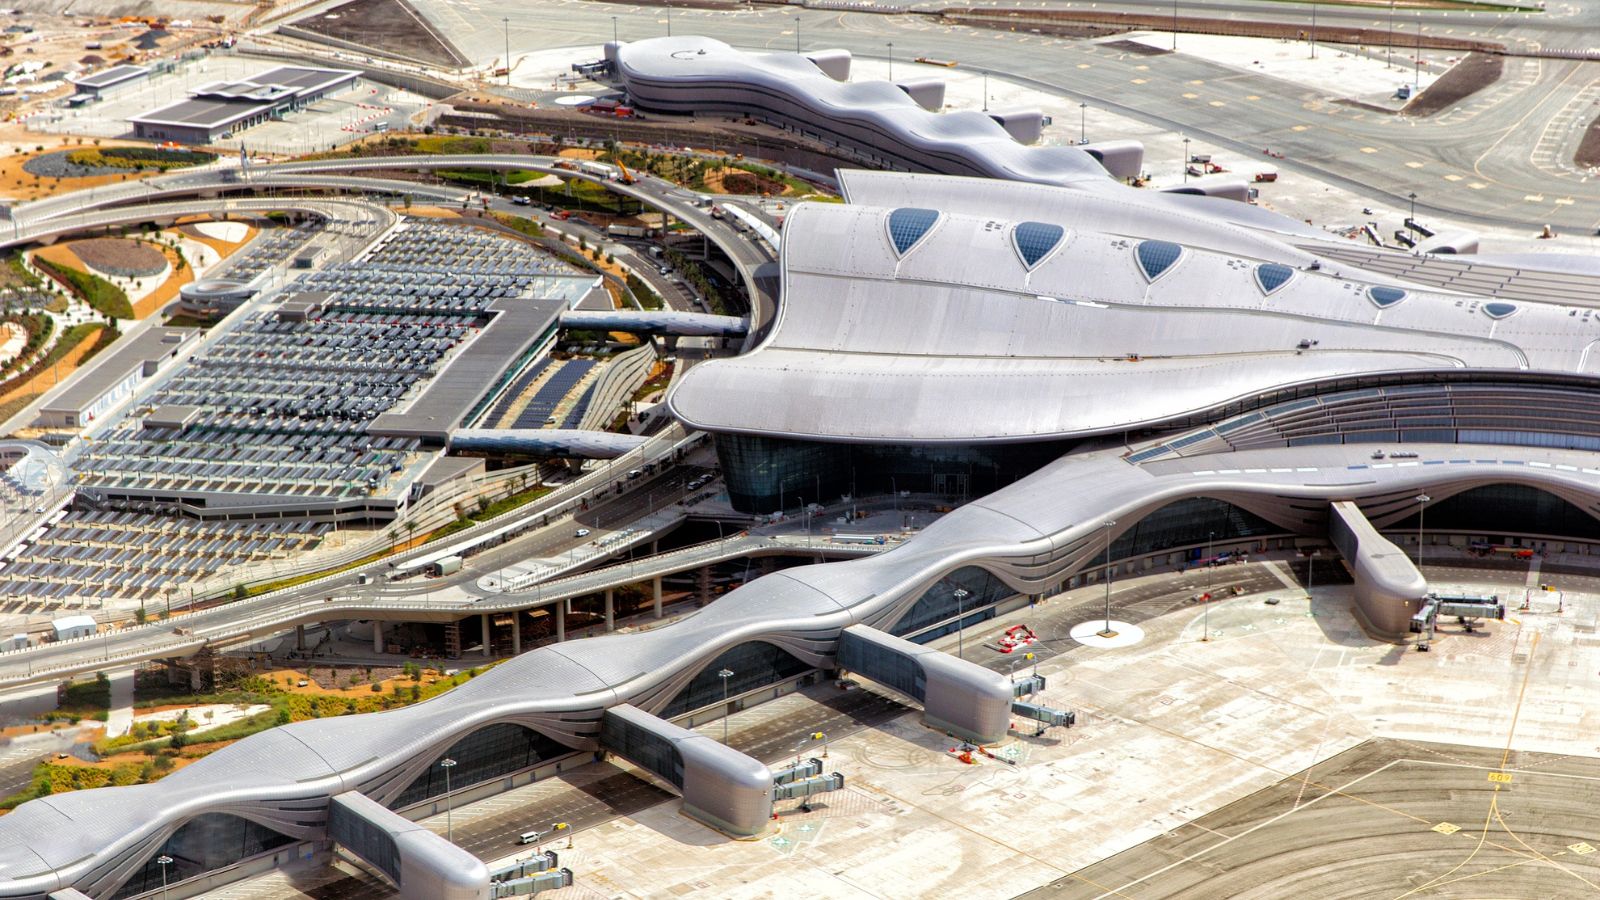 Birds eye view of Dubai International Airport